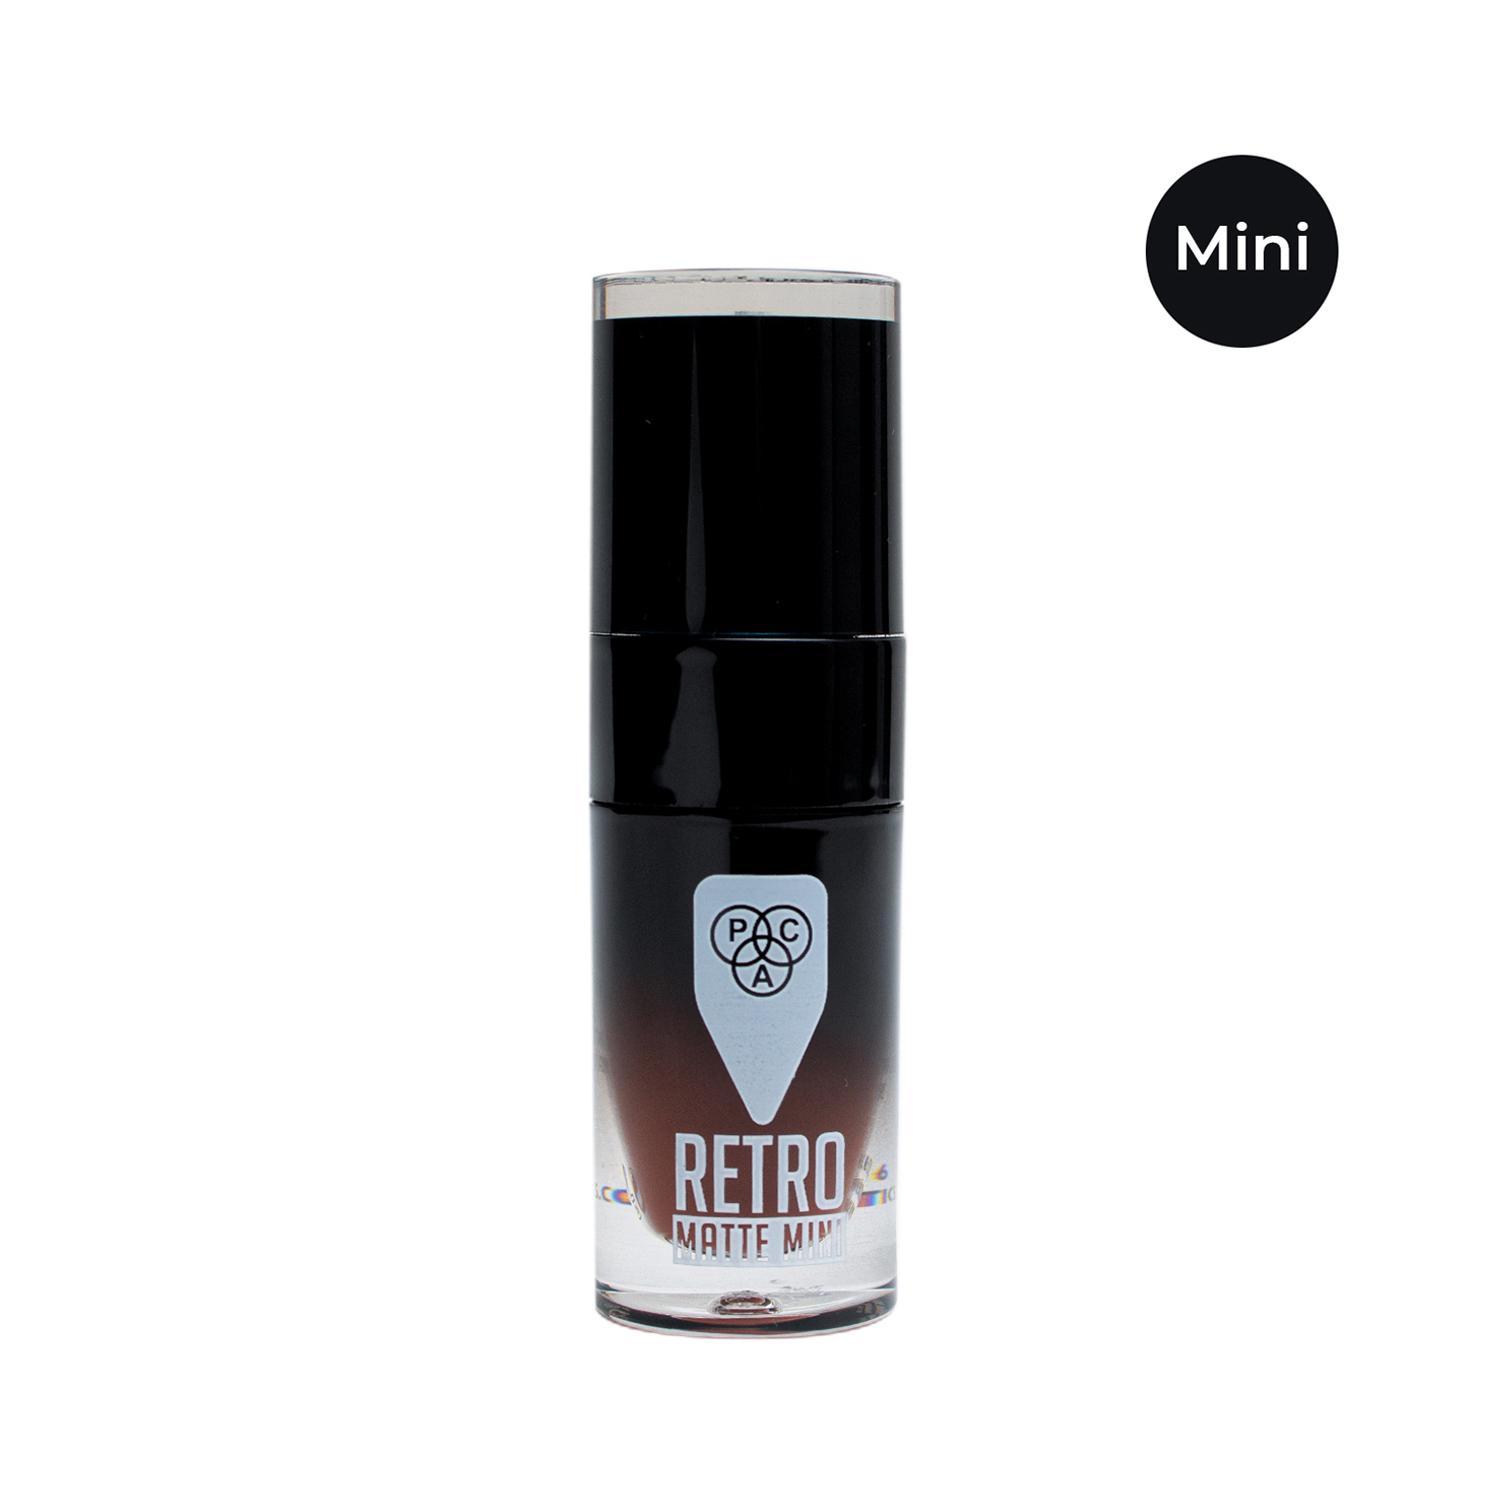 PAC | PAC Retro Matte Gloss Mini Liquid Lipstick - 08 Smirk (3ml)